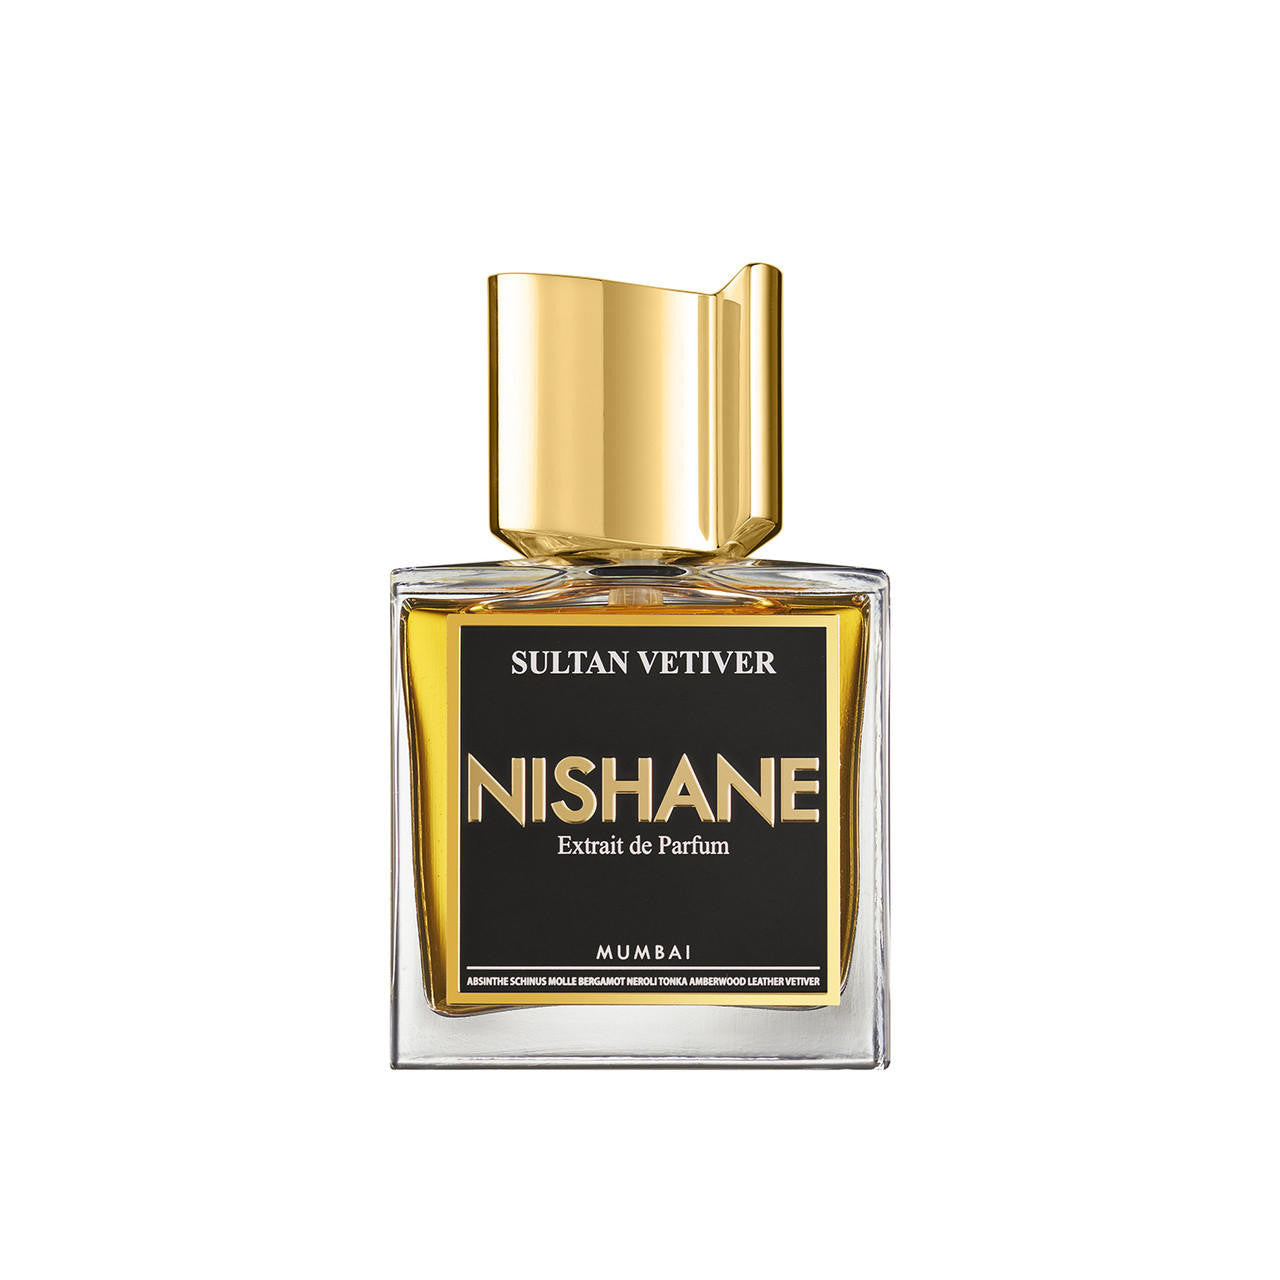  Nishane Sultan Vetiver Extrait de Parfum 